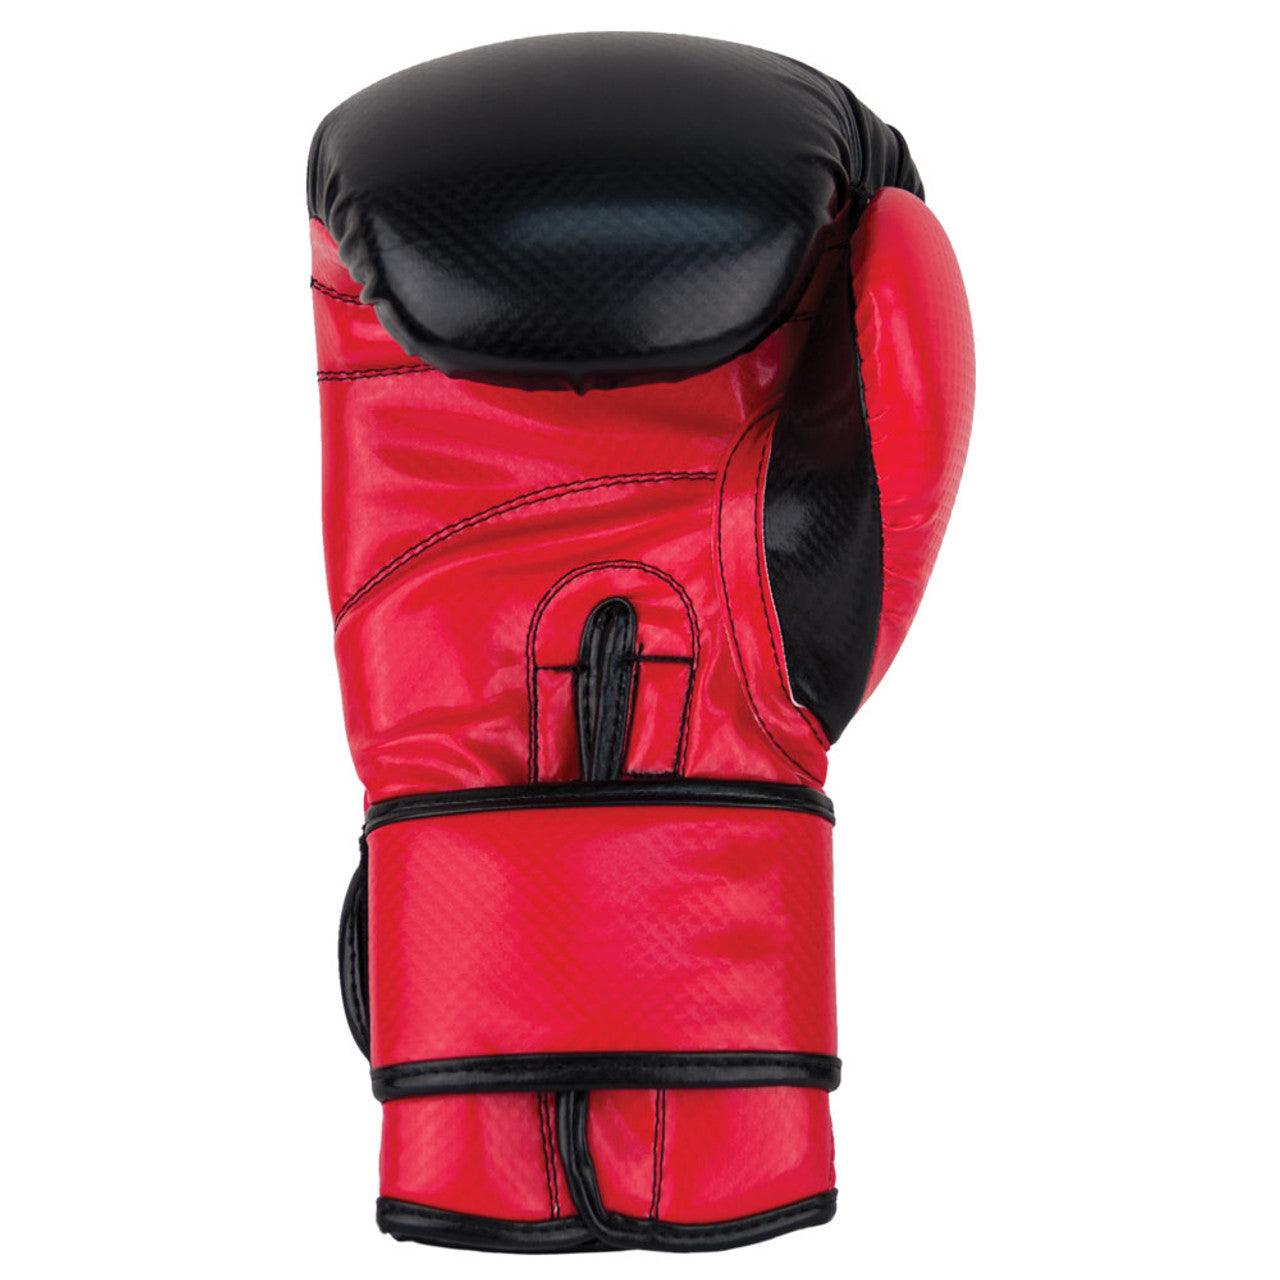 Pinnacle P2 Boxing Gloves - Black / Red - Violent Art Shop